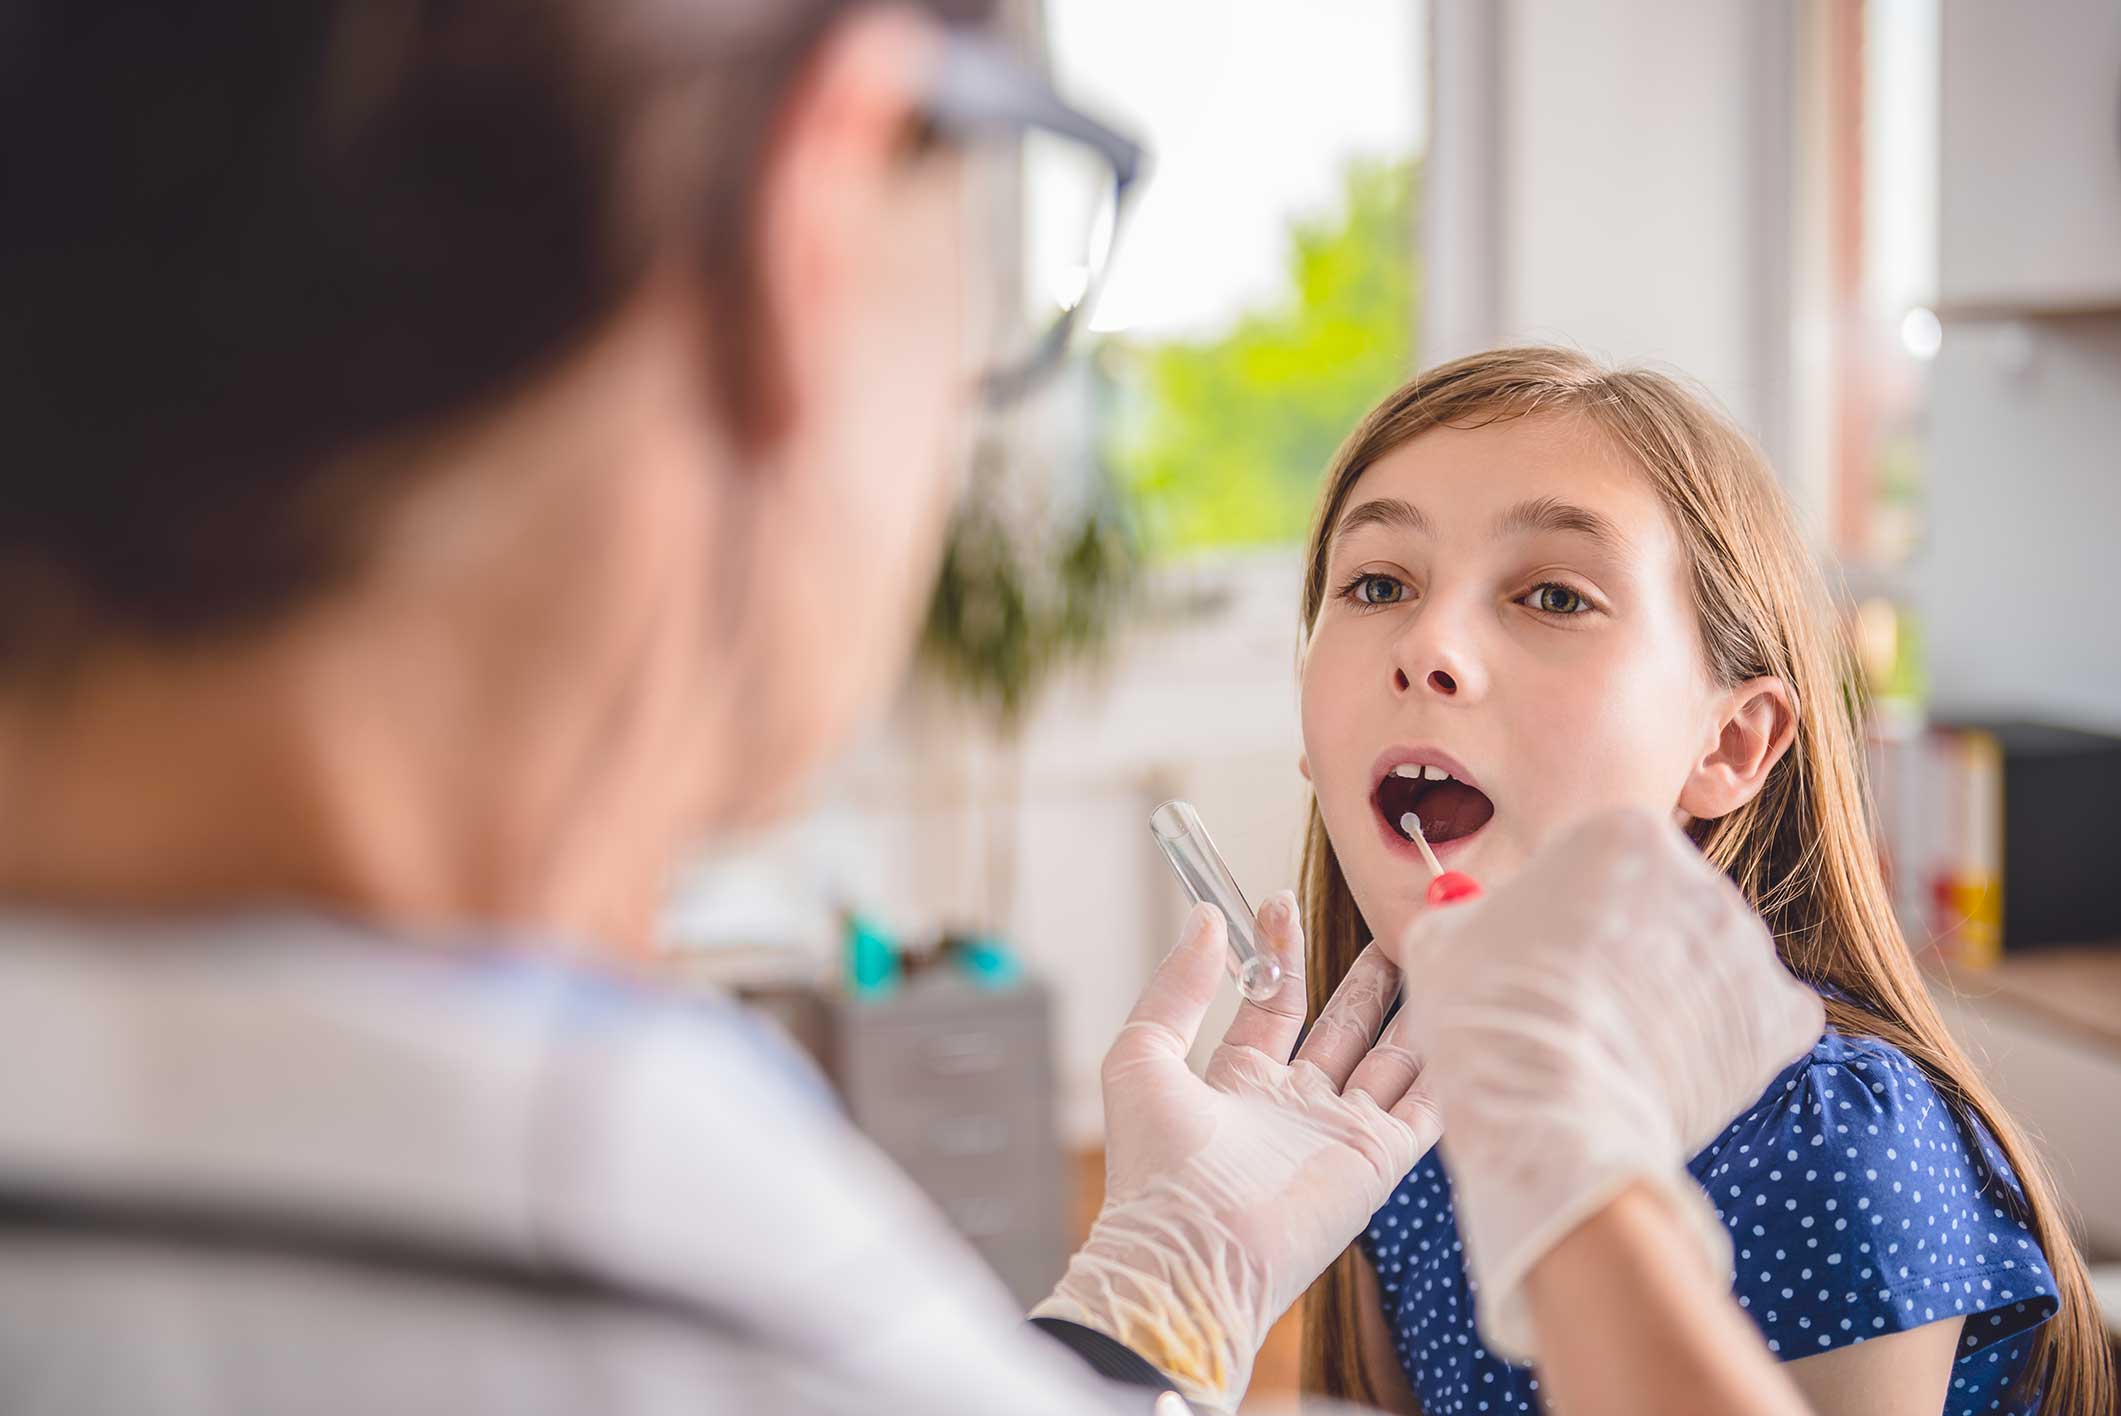 ENT examining a patient's vocal cords